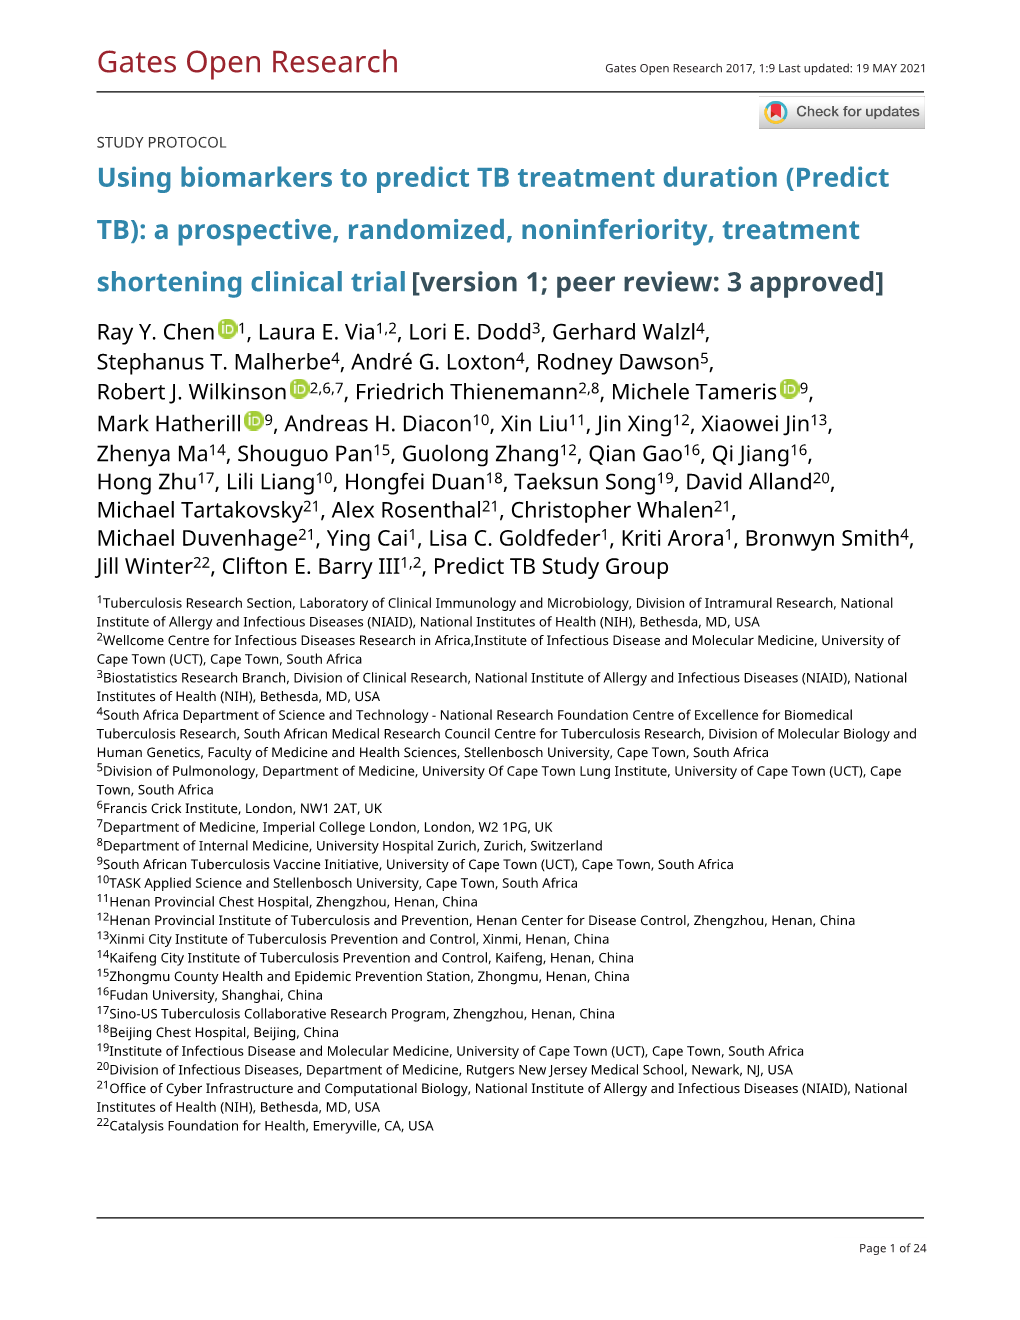 Using Biomarkers to Predict TB Treatment Duration (Predict TB): A